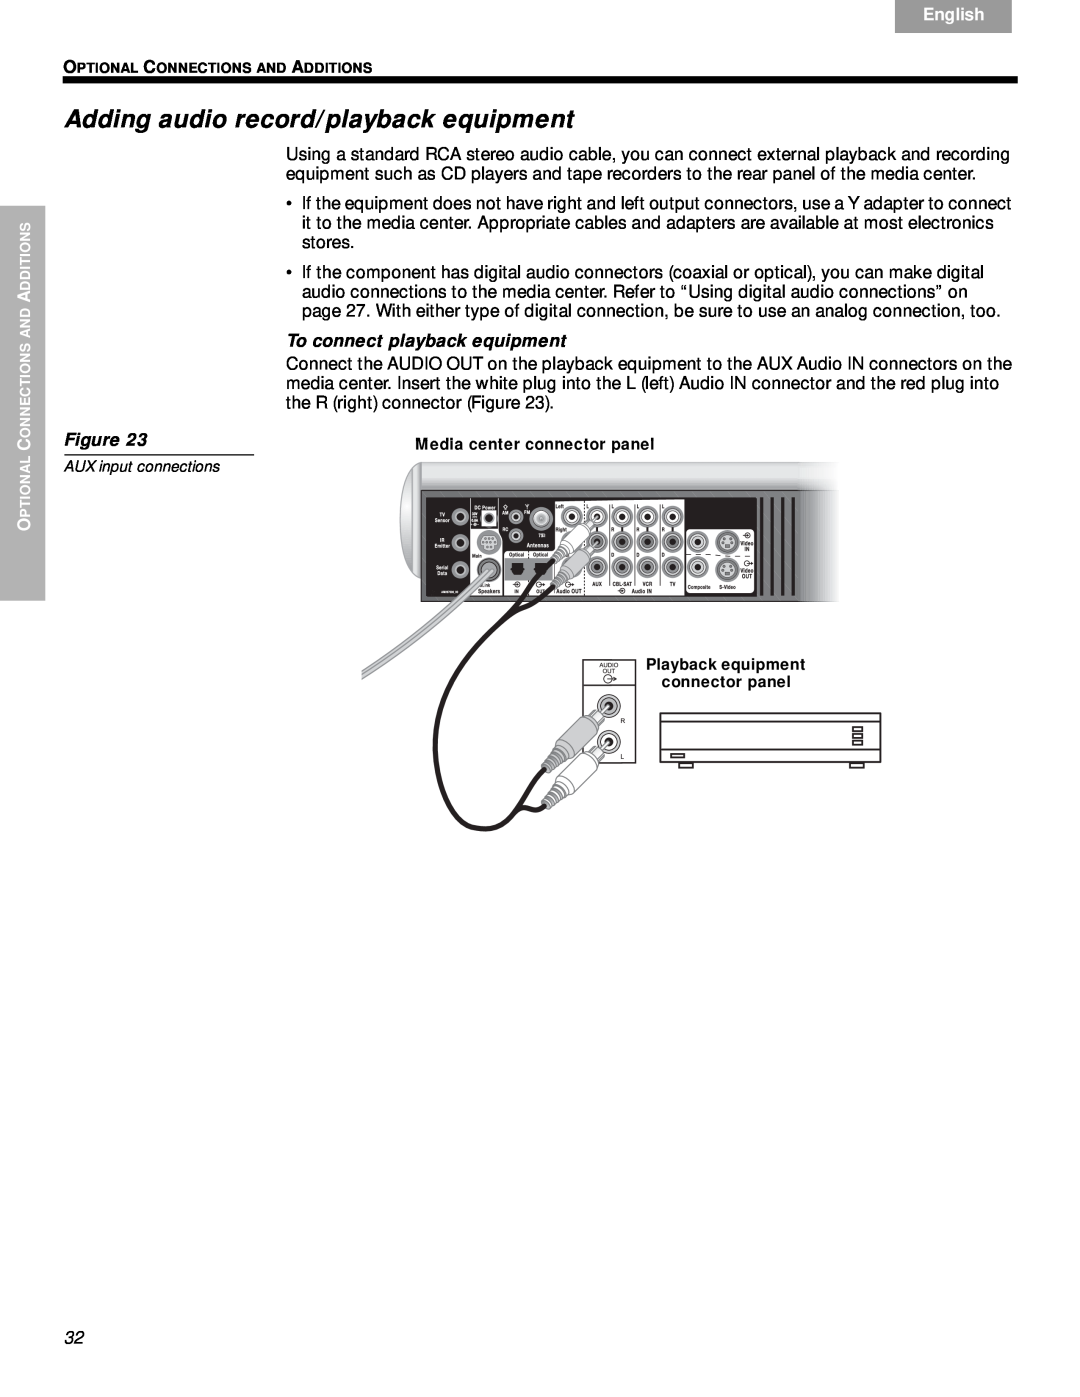 Bose VS-2 Adding audio record/playback equipment, To connect playback equipment, Svenska, Nederlands, English, Figure 